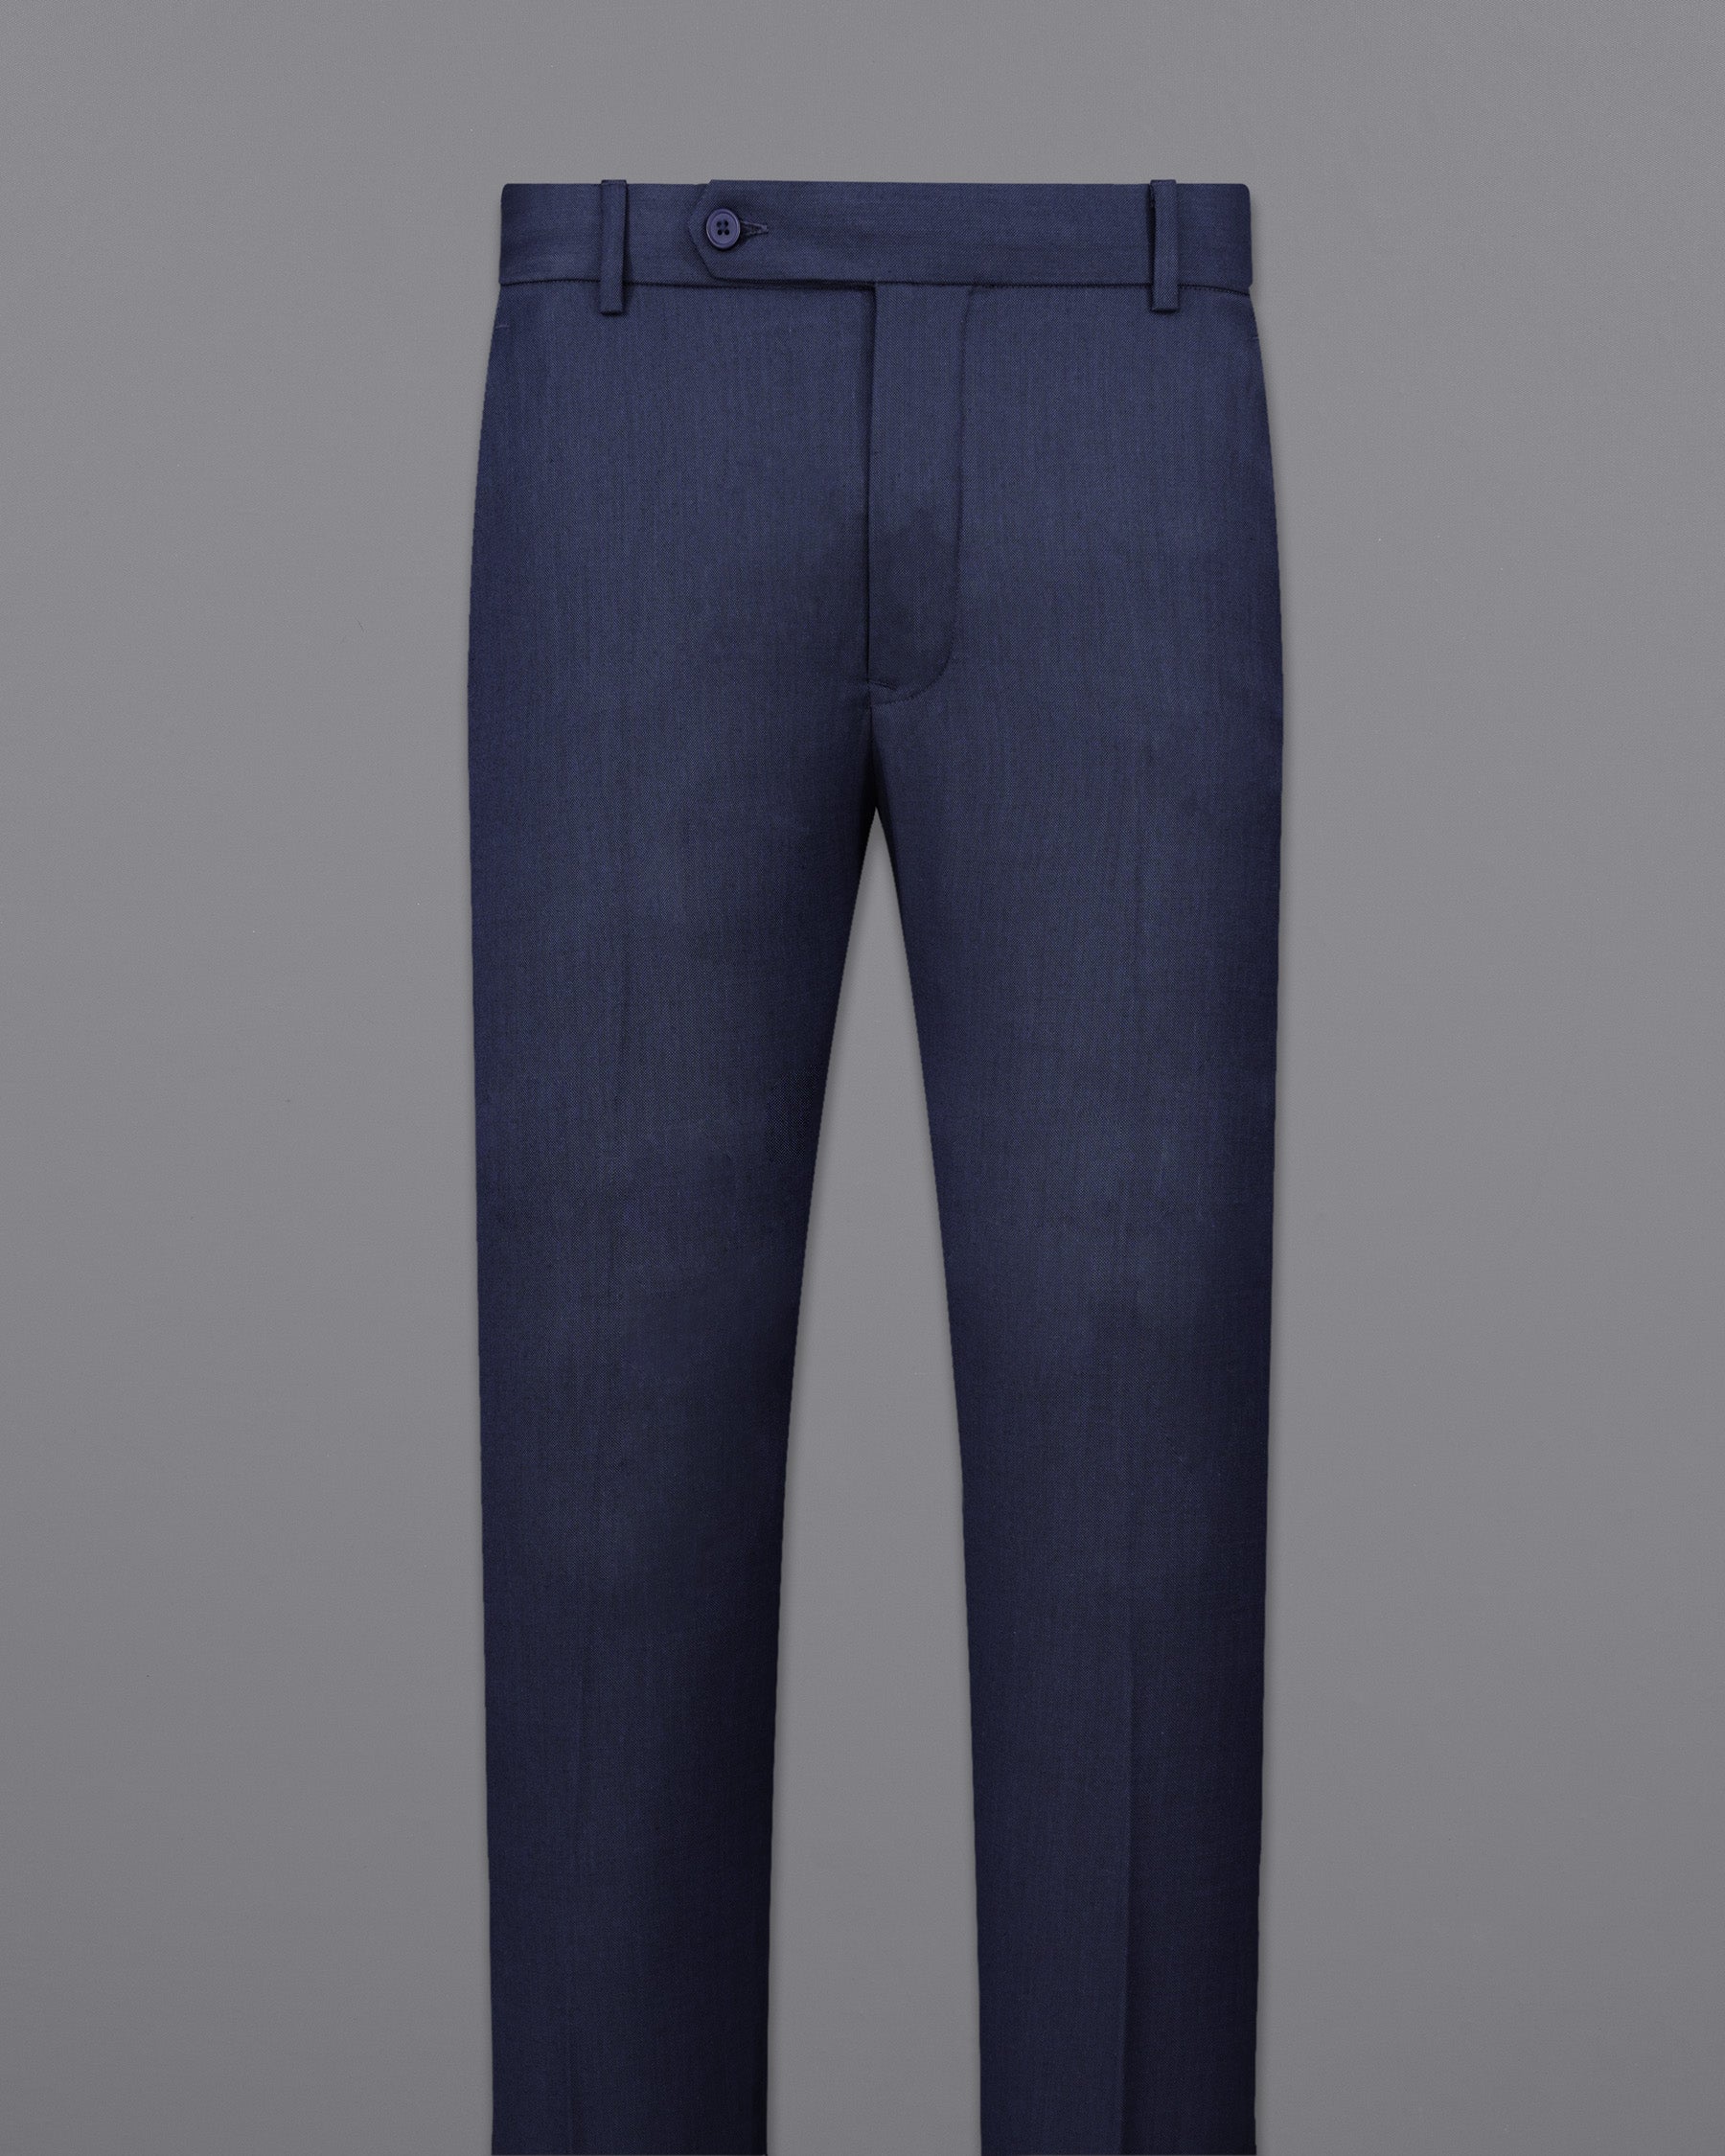 Gunmetal Navy Blue Solid Pant